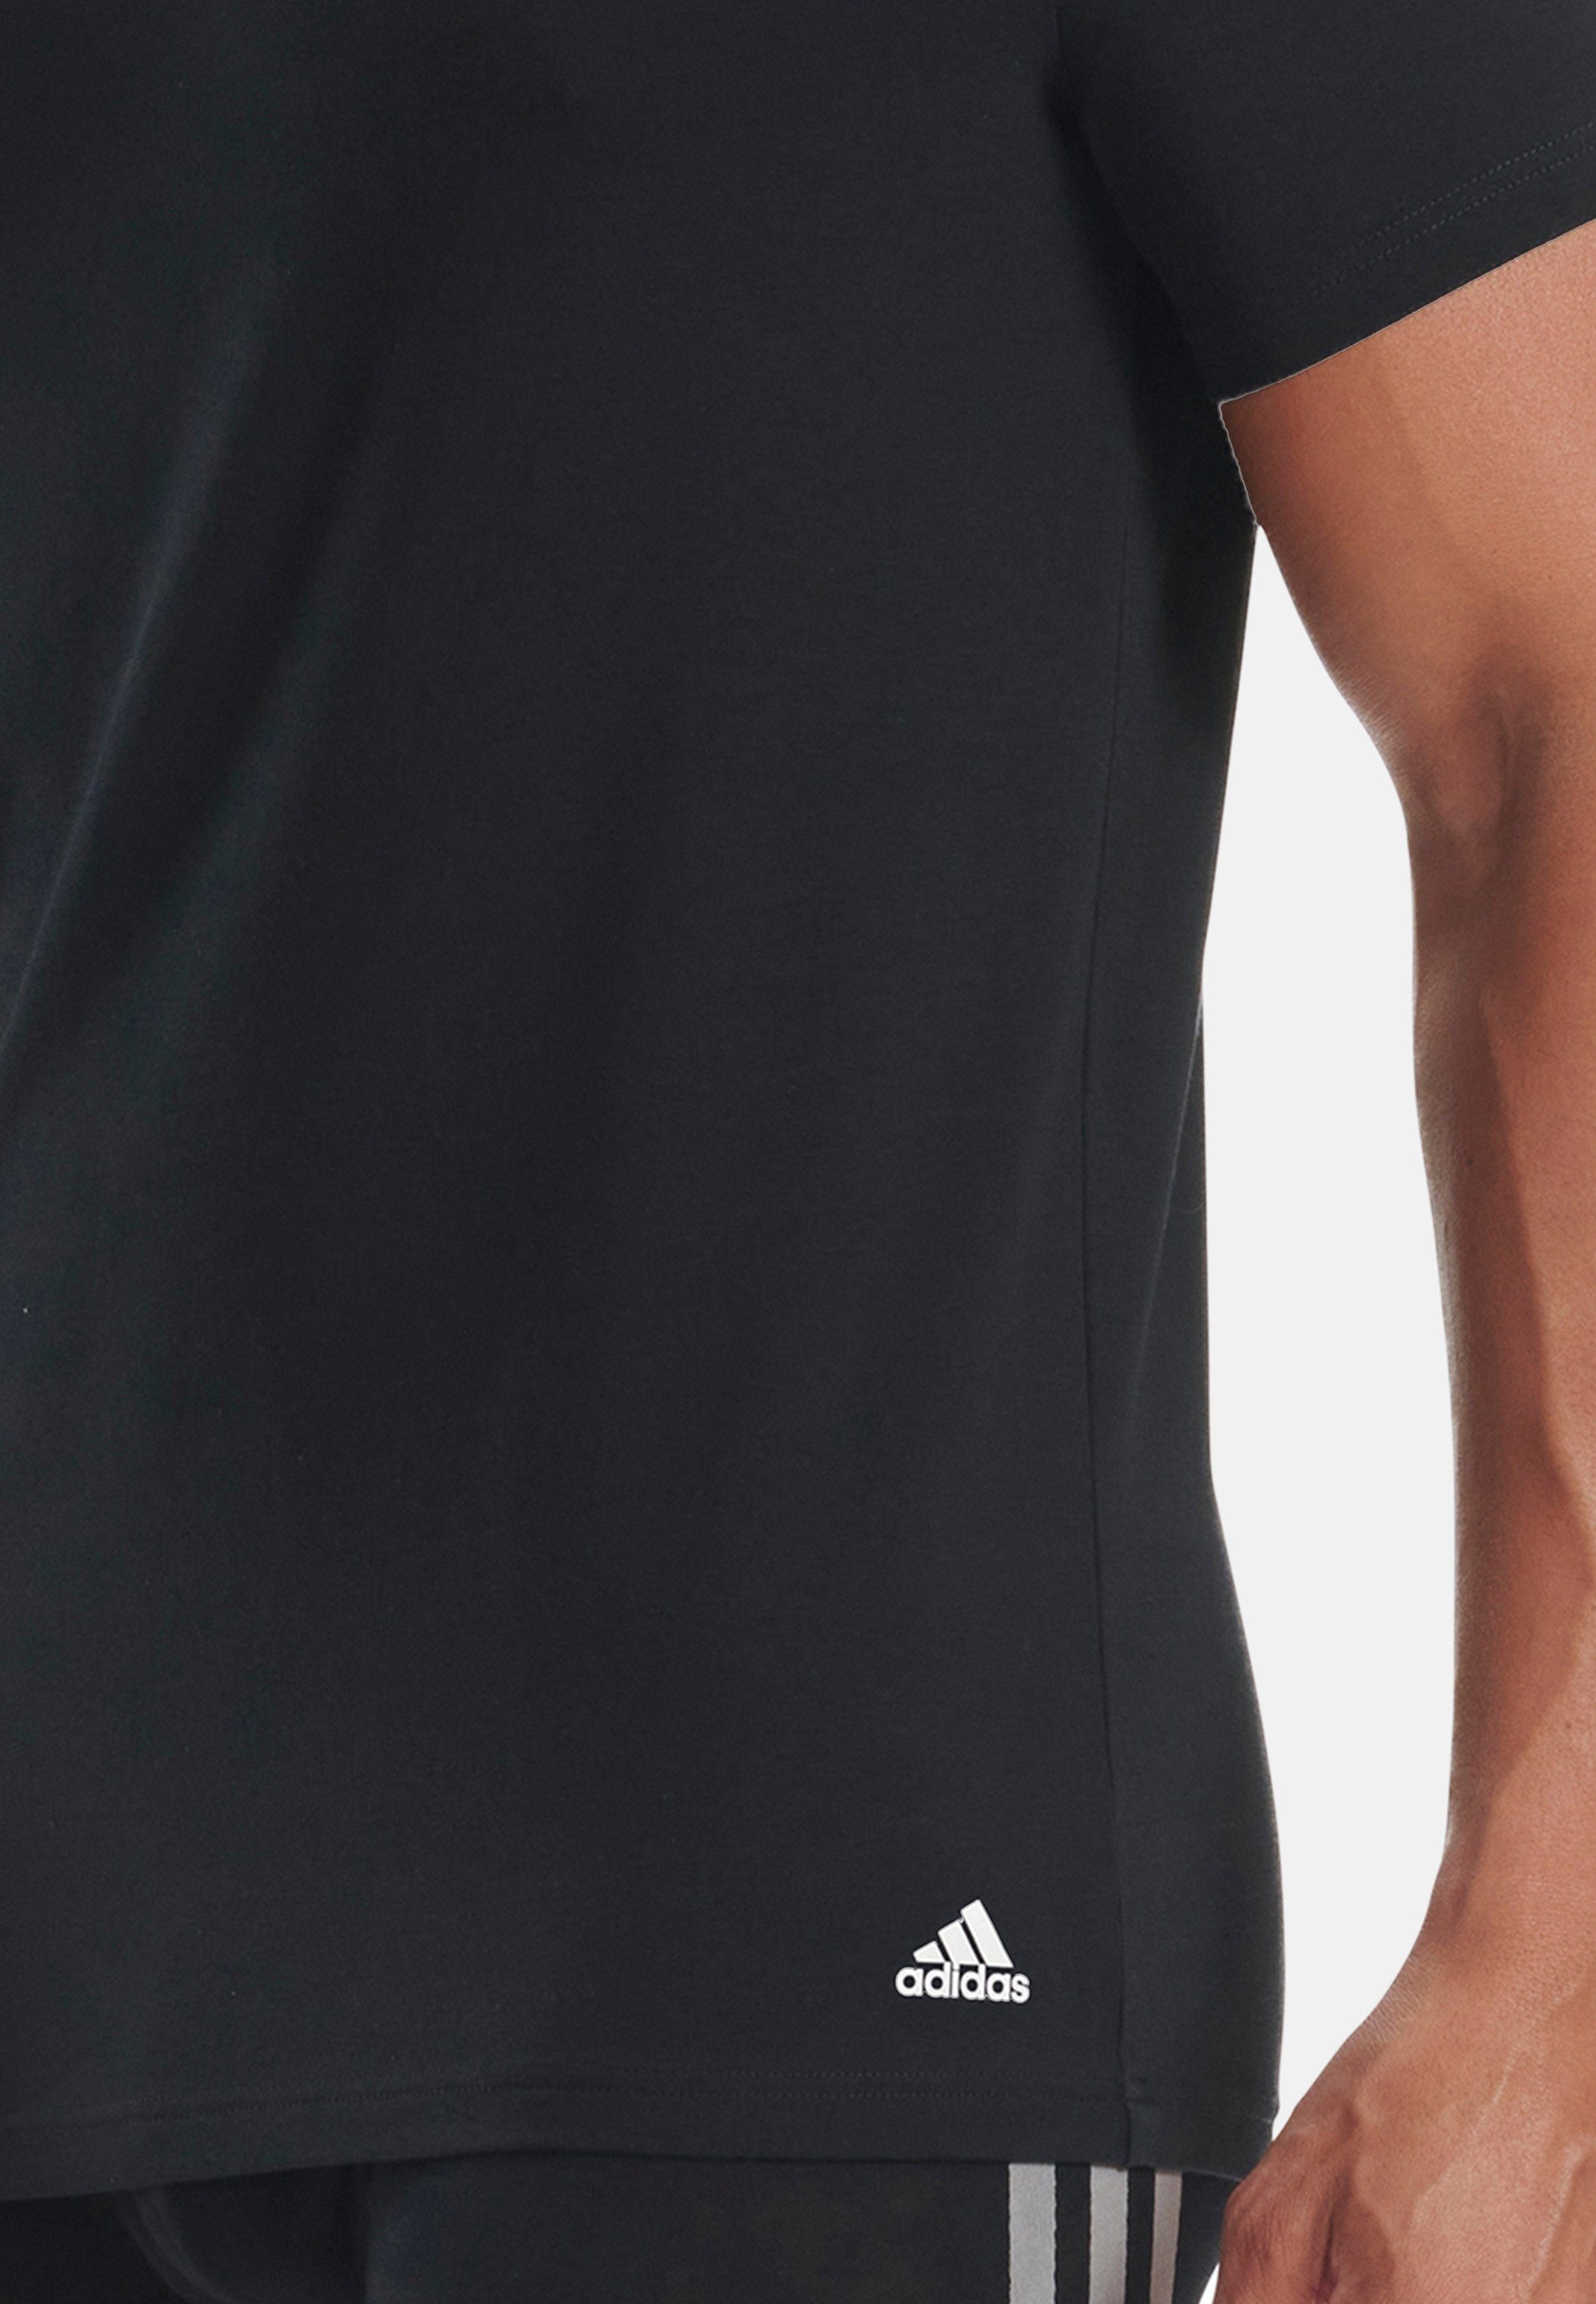 / adidas Unterhemd Legere Cotton Unterhemd (Spar-Set, - Passform 6-St) Schwarz 6er Active Pack Shirt Baumwolle Core - Kurzarm Sportswear